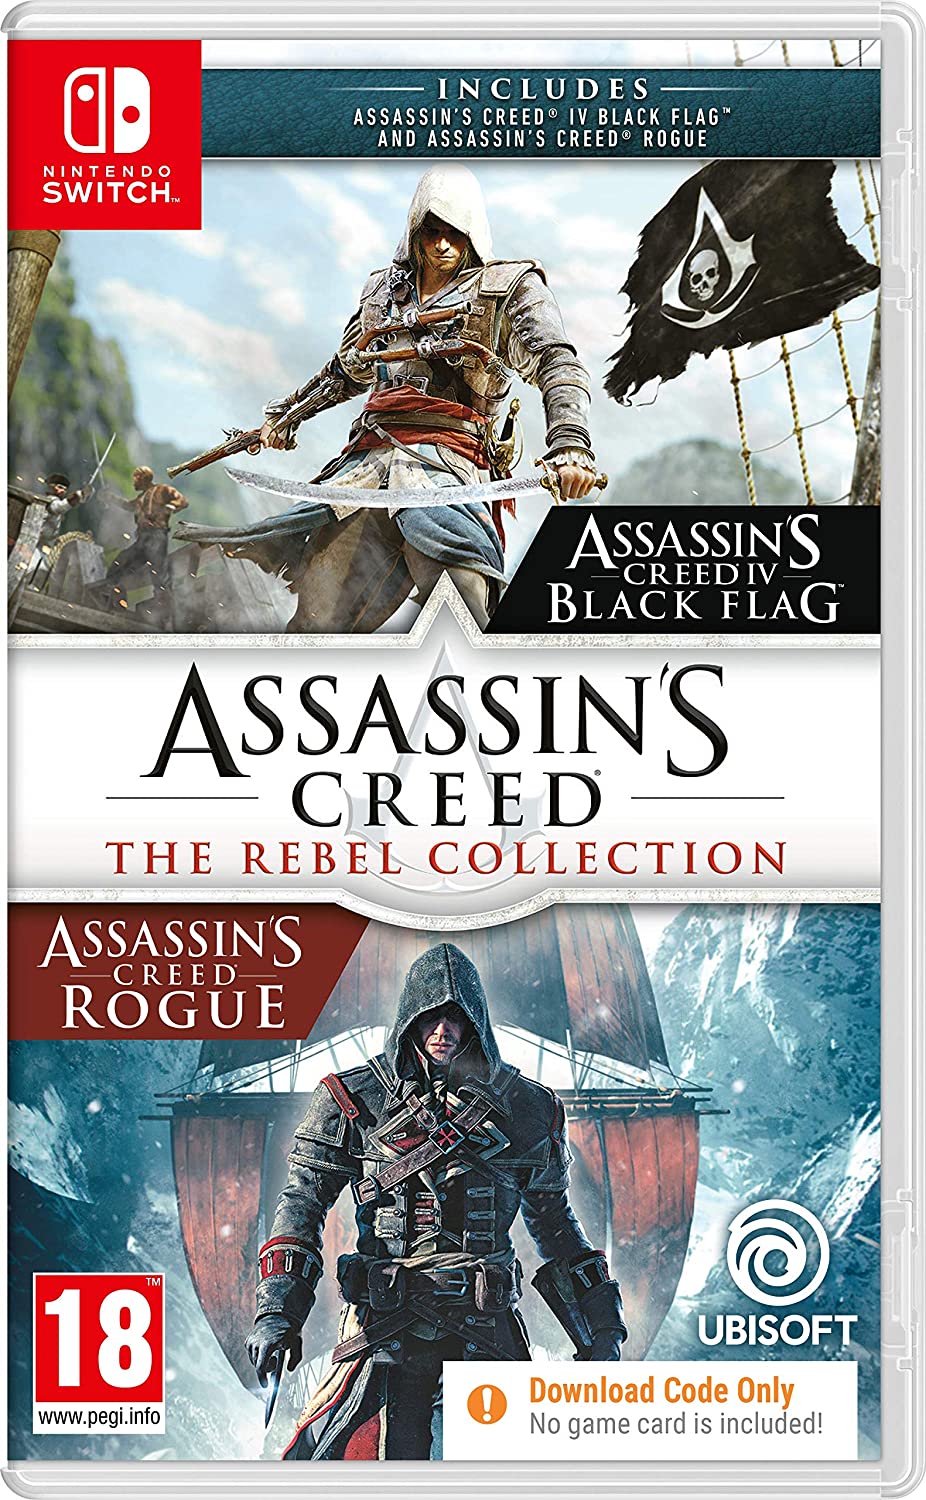 Assassin's Creed : la collection rebelle sur Nintendo Switch.